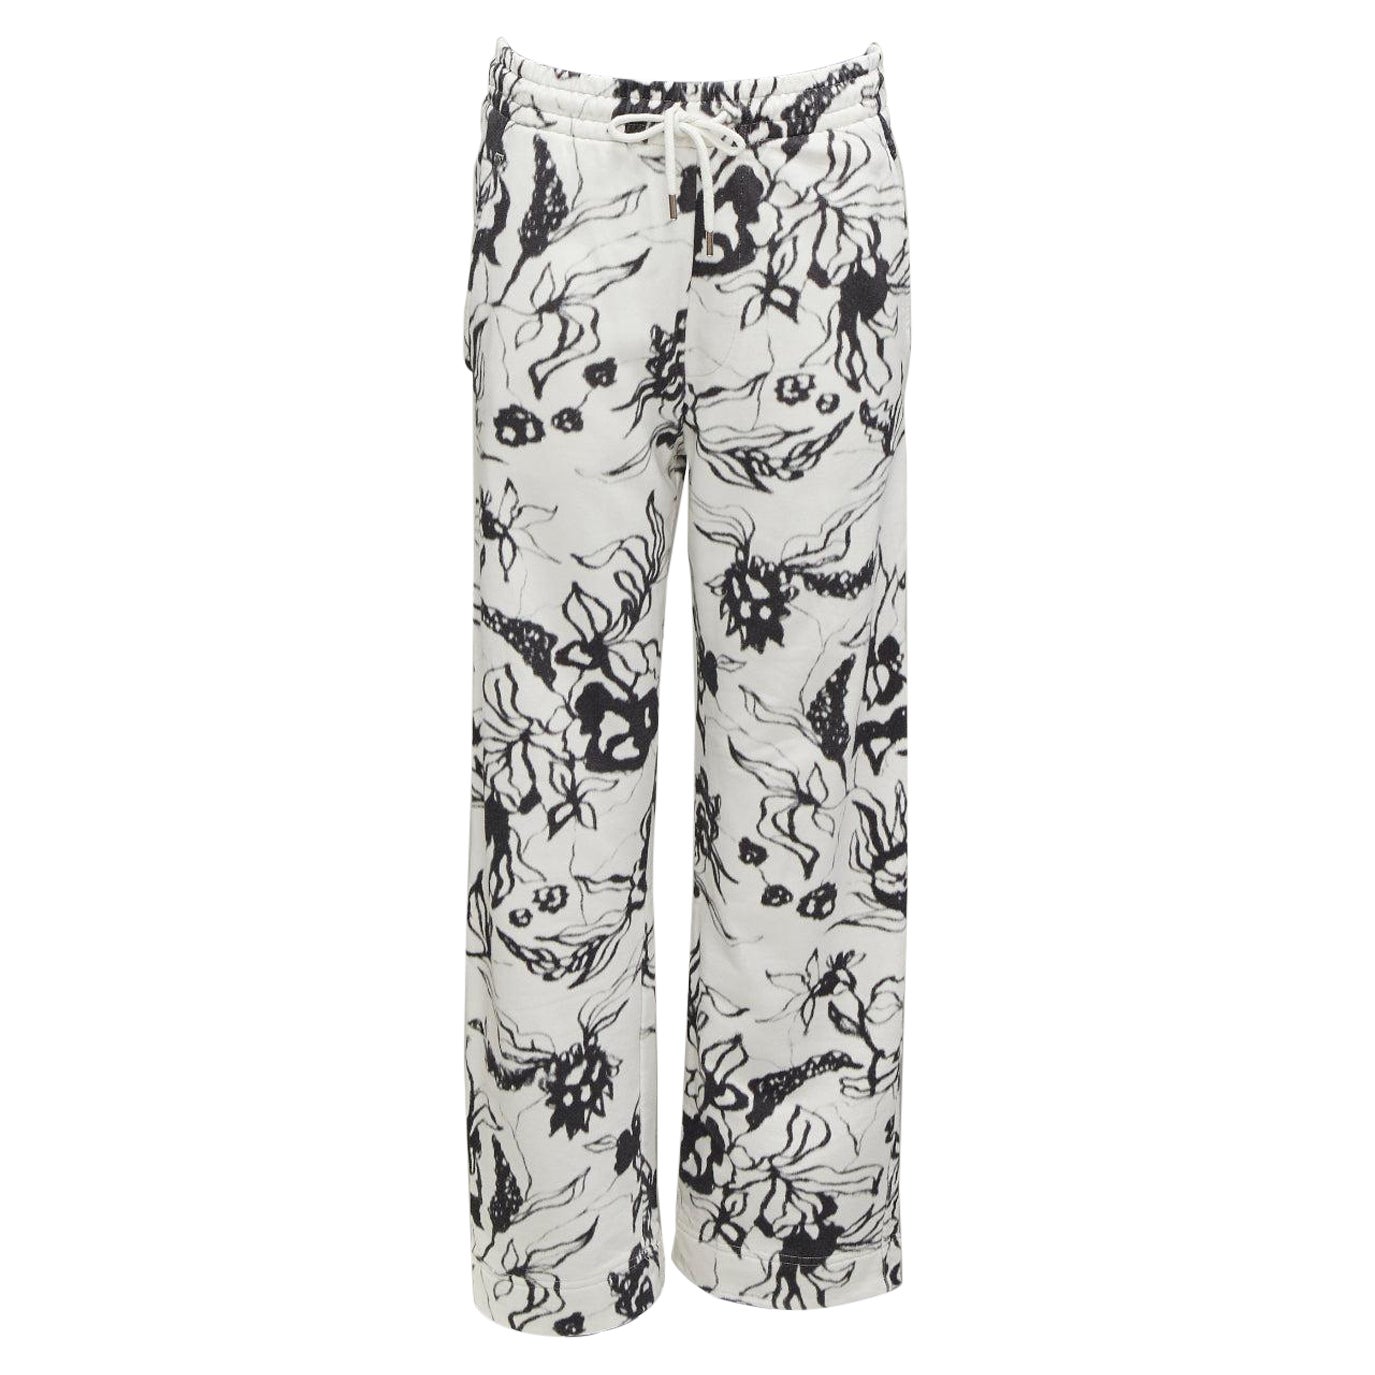 DRIES VAN NOTEN black white cotton blurry abstract floral print sweatpants S For Sale